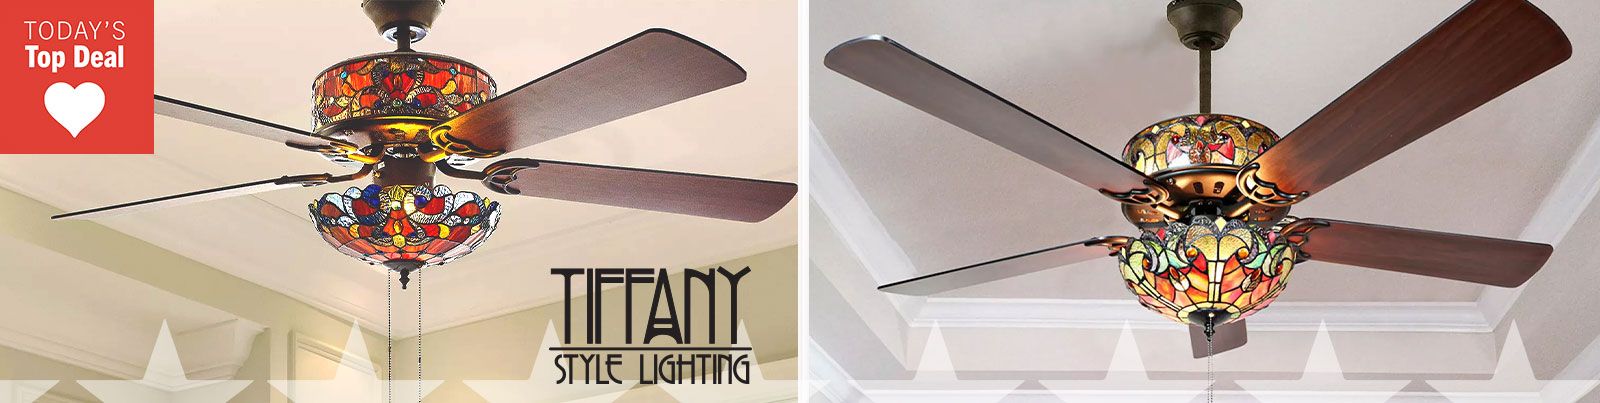 522-370 Tiffany Style Lighting Magna Carta Ceiling Fan